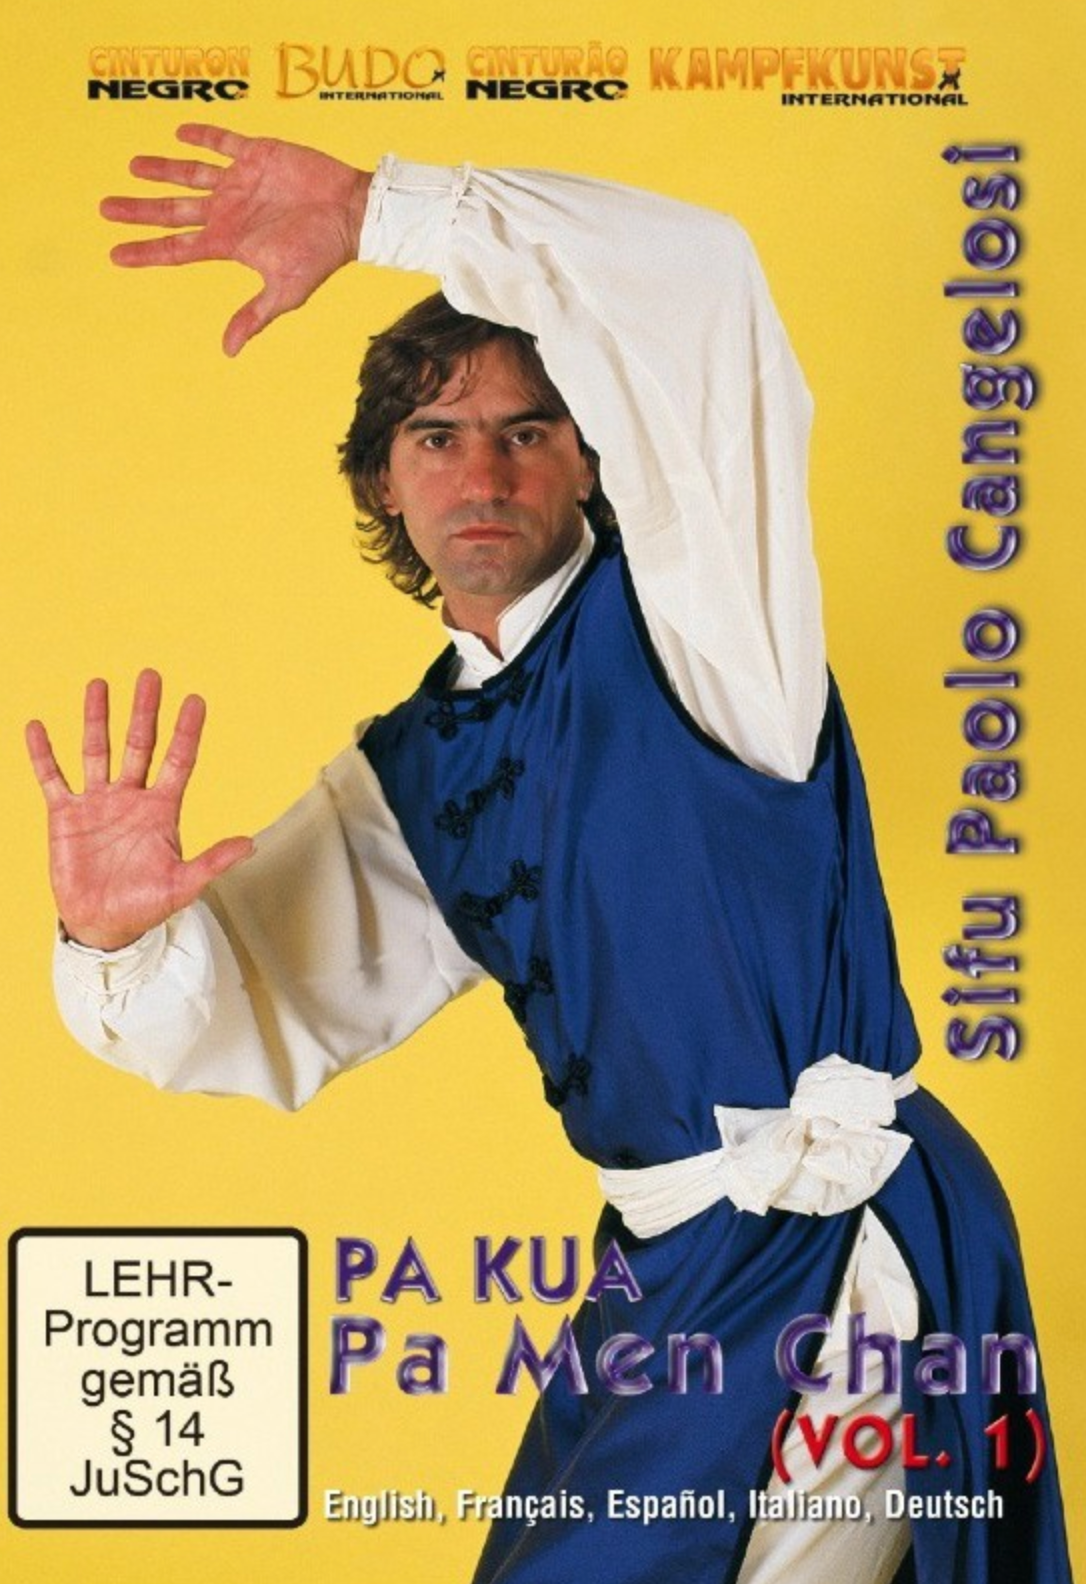 Kung Fu Pa Kua Pa Men Chan Form Vol 1 DVD with Paolo Cangelosi - Budovideos Inc